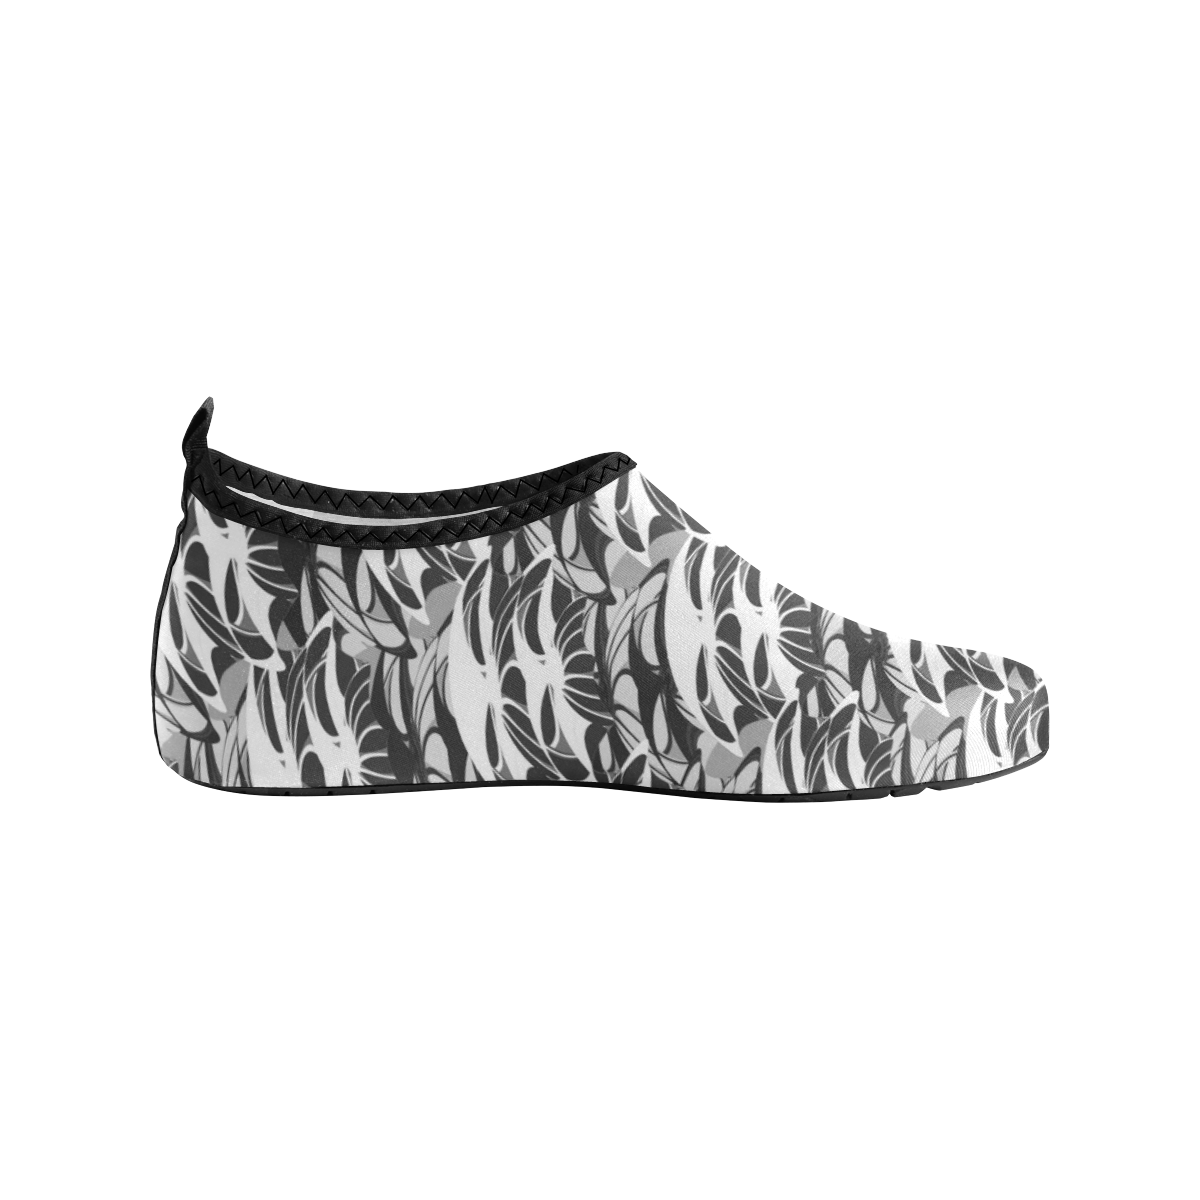 Alien Troops - Black & White Men's Slip-On Water Shoes (Model 056)